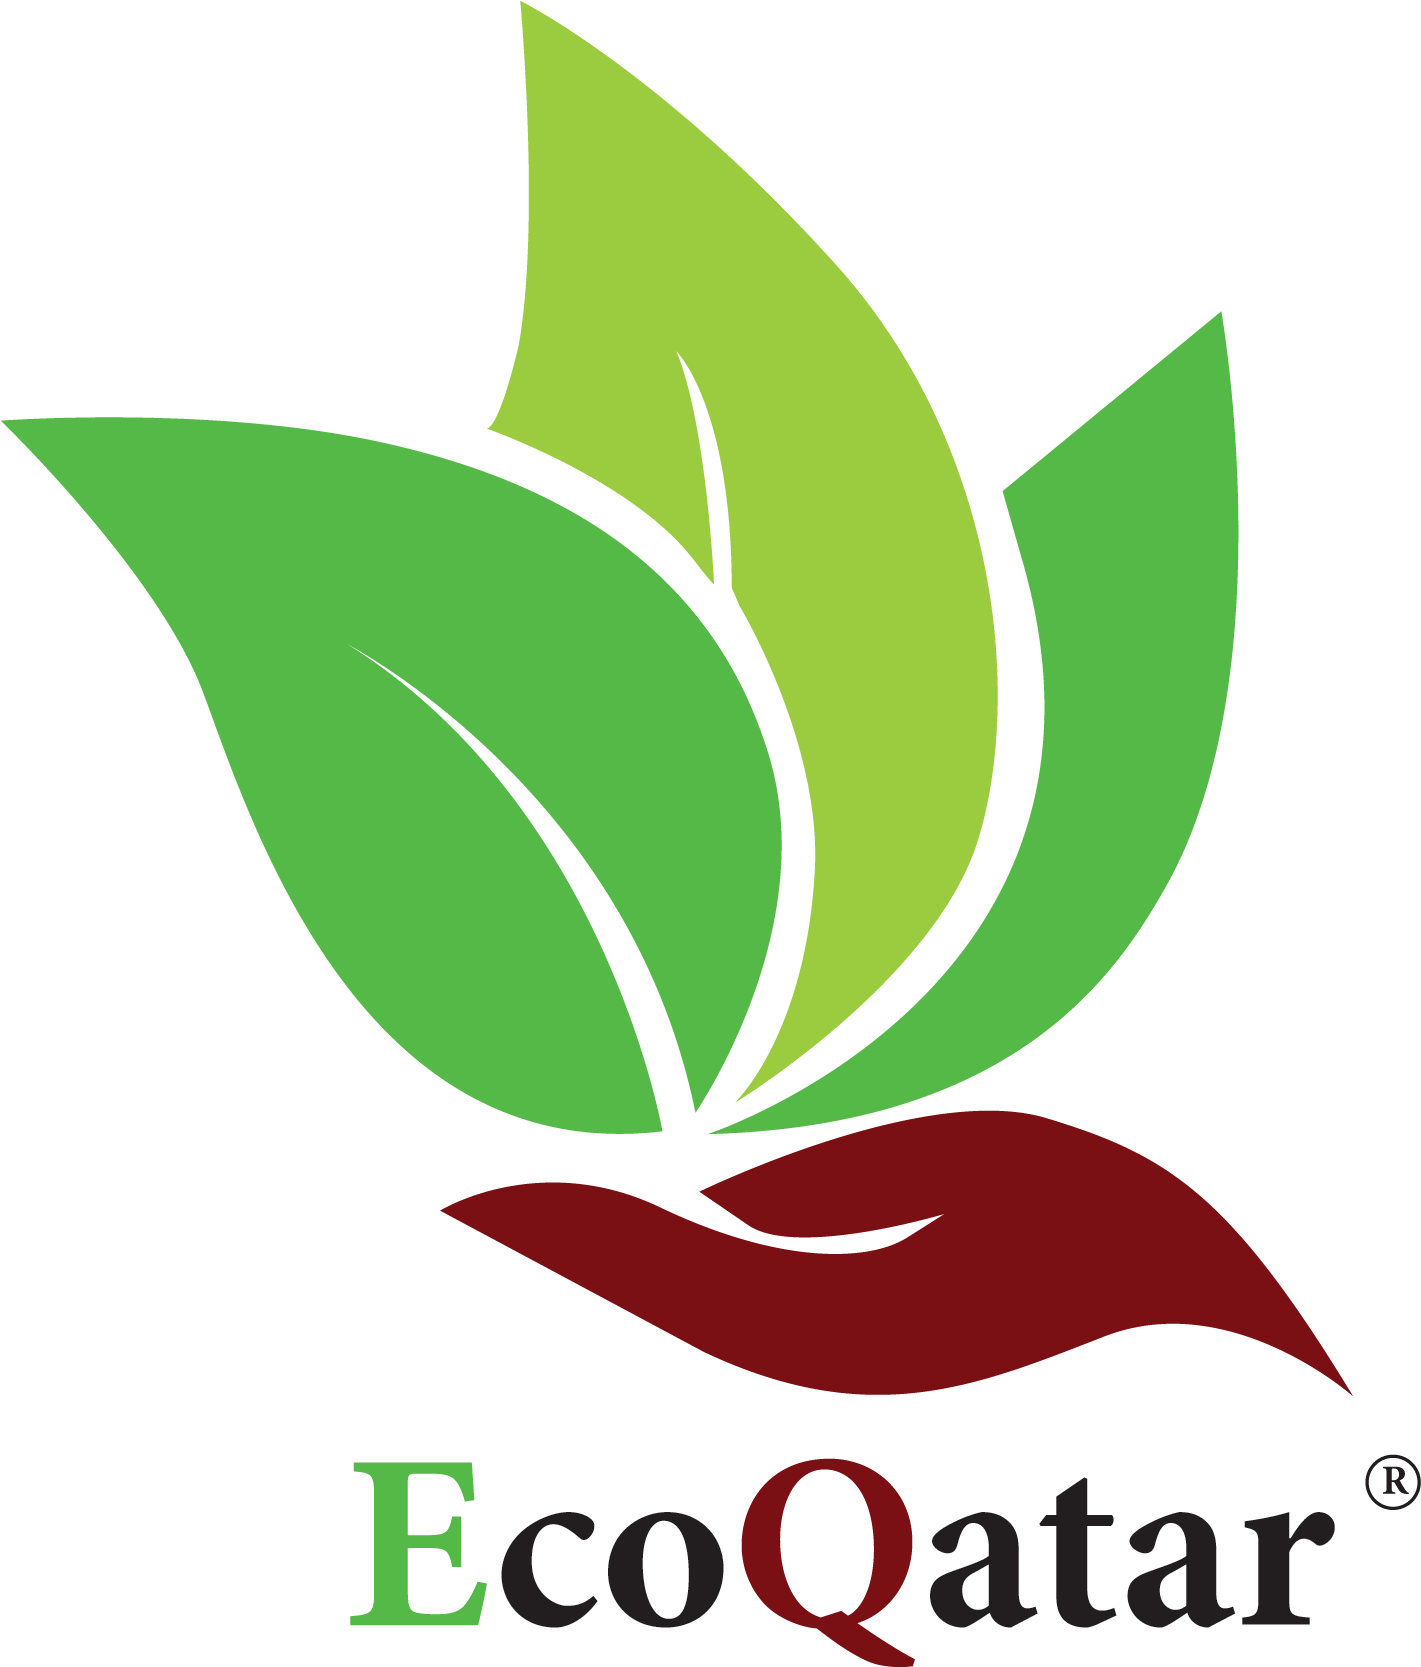 Ecology logo nature environment natural label Vector Image